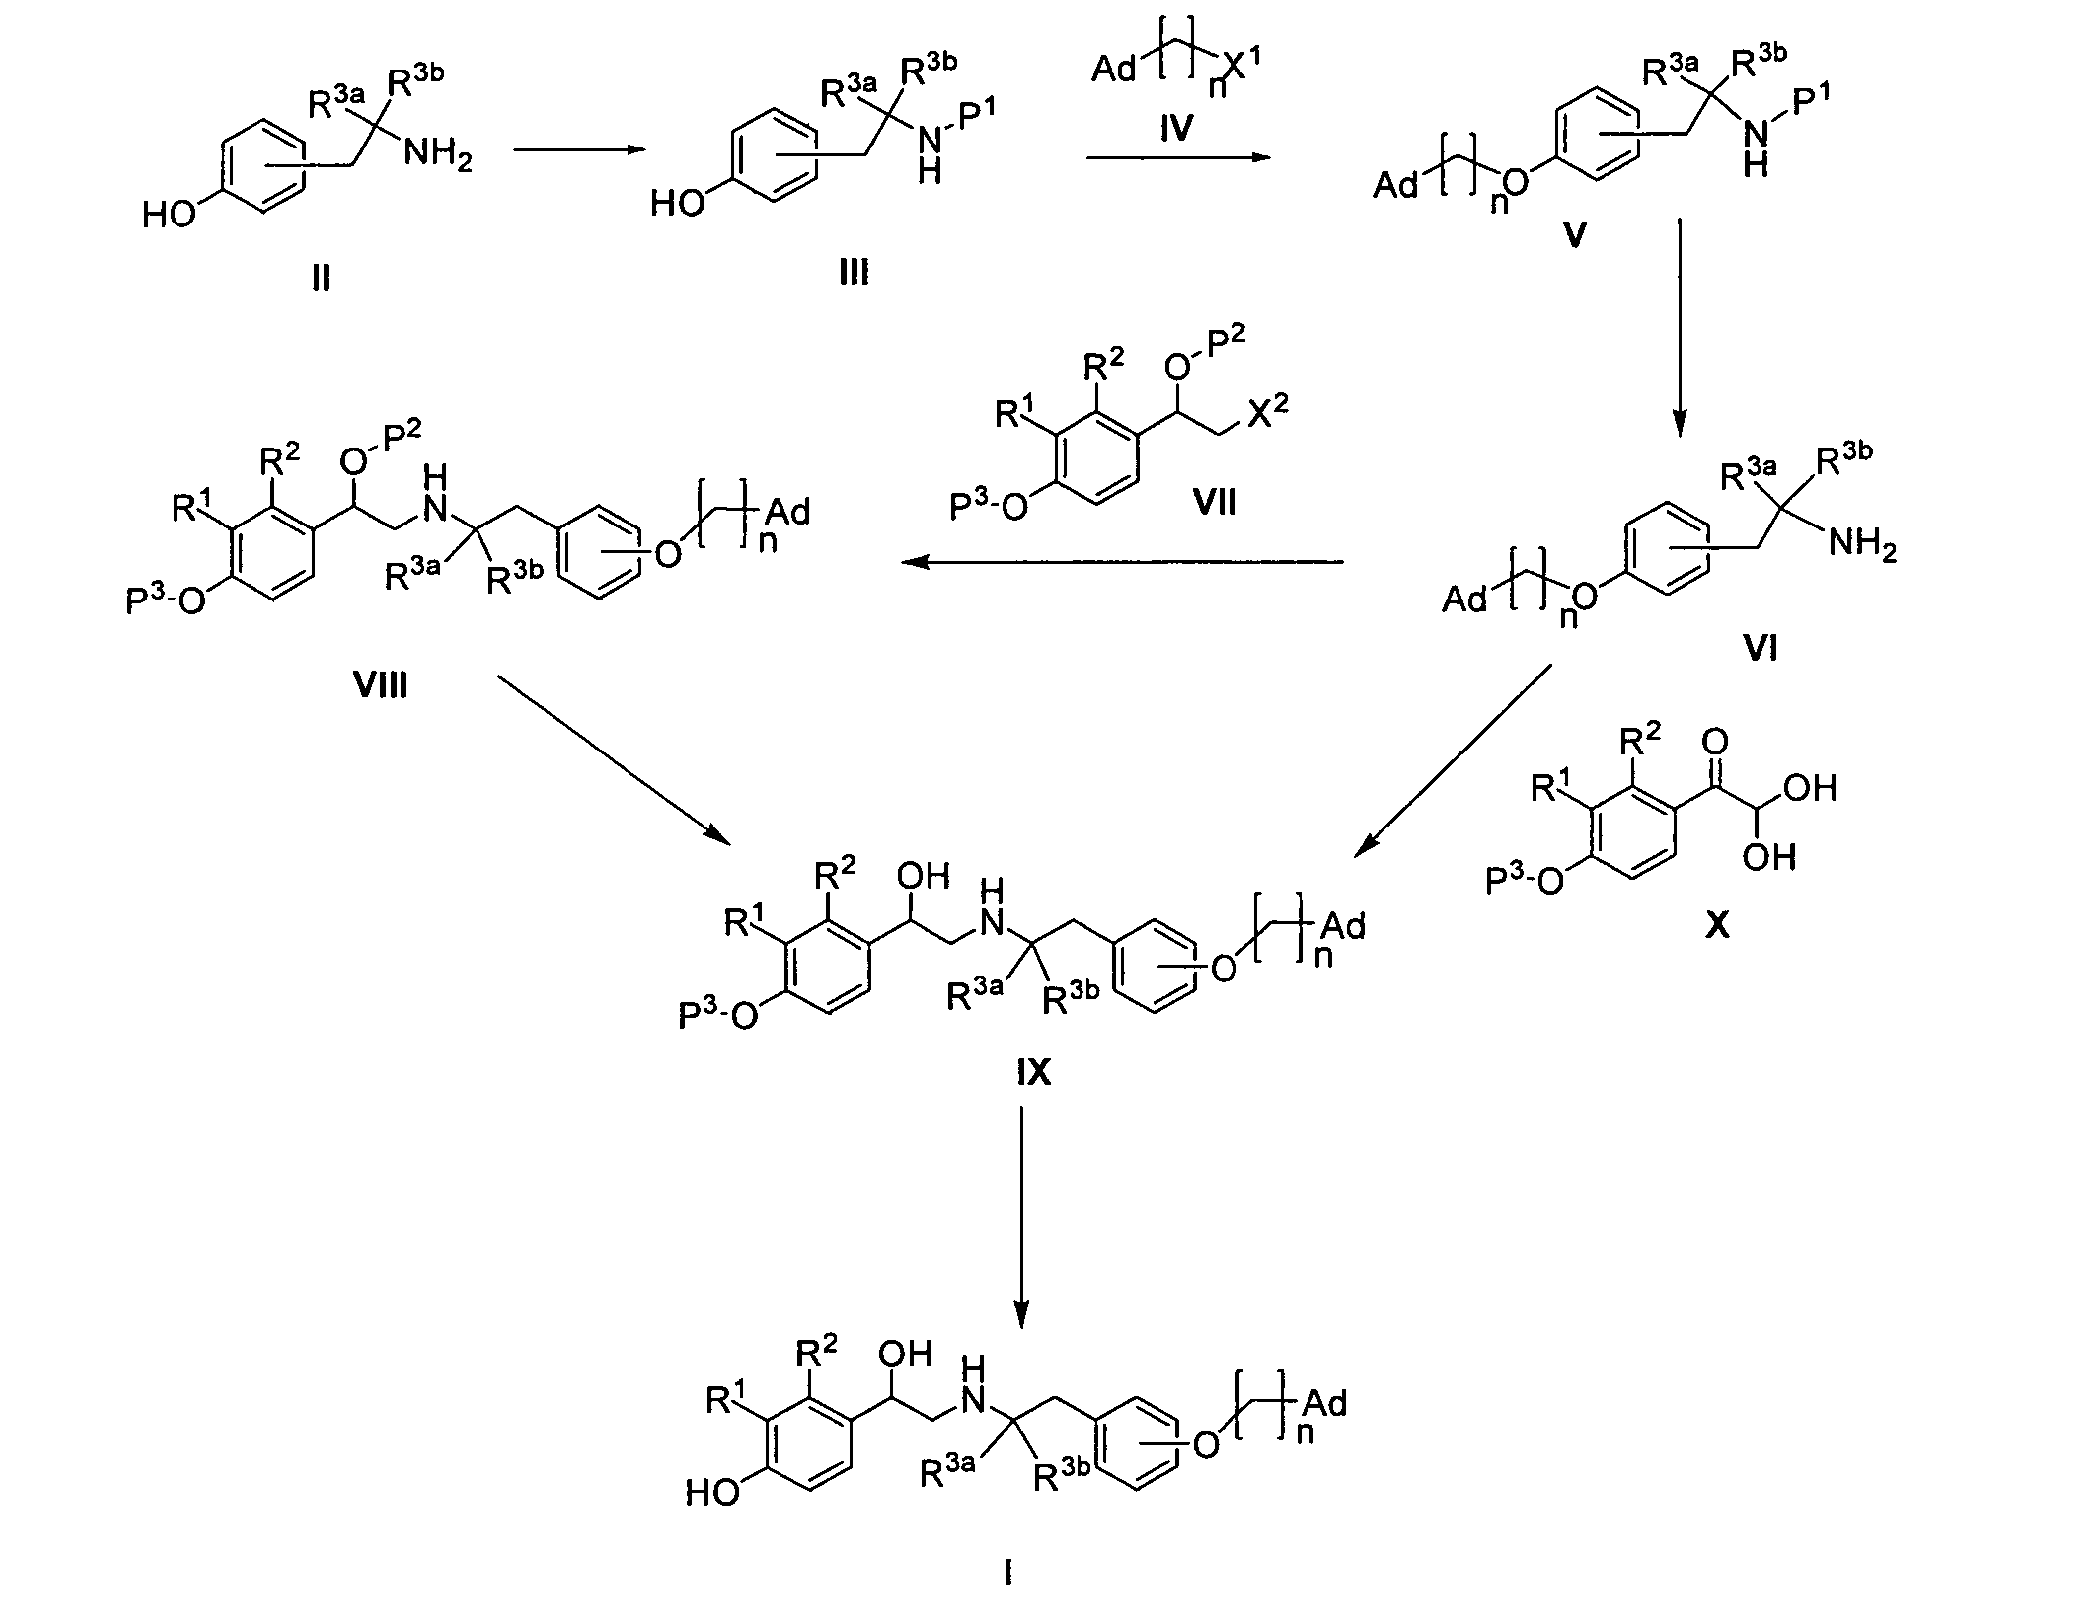 Derivatives of 4-(2-amino-1-hydroxyethyl)phenol as agonists of the beta2 adrenergic receptors